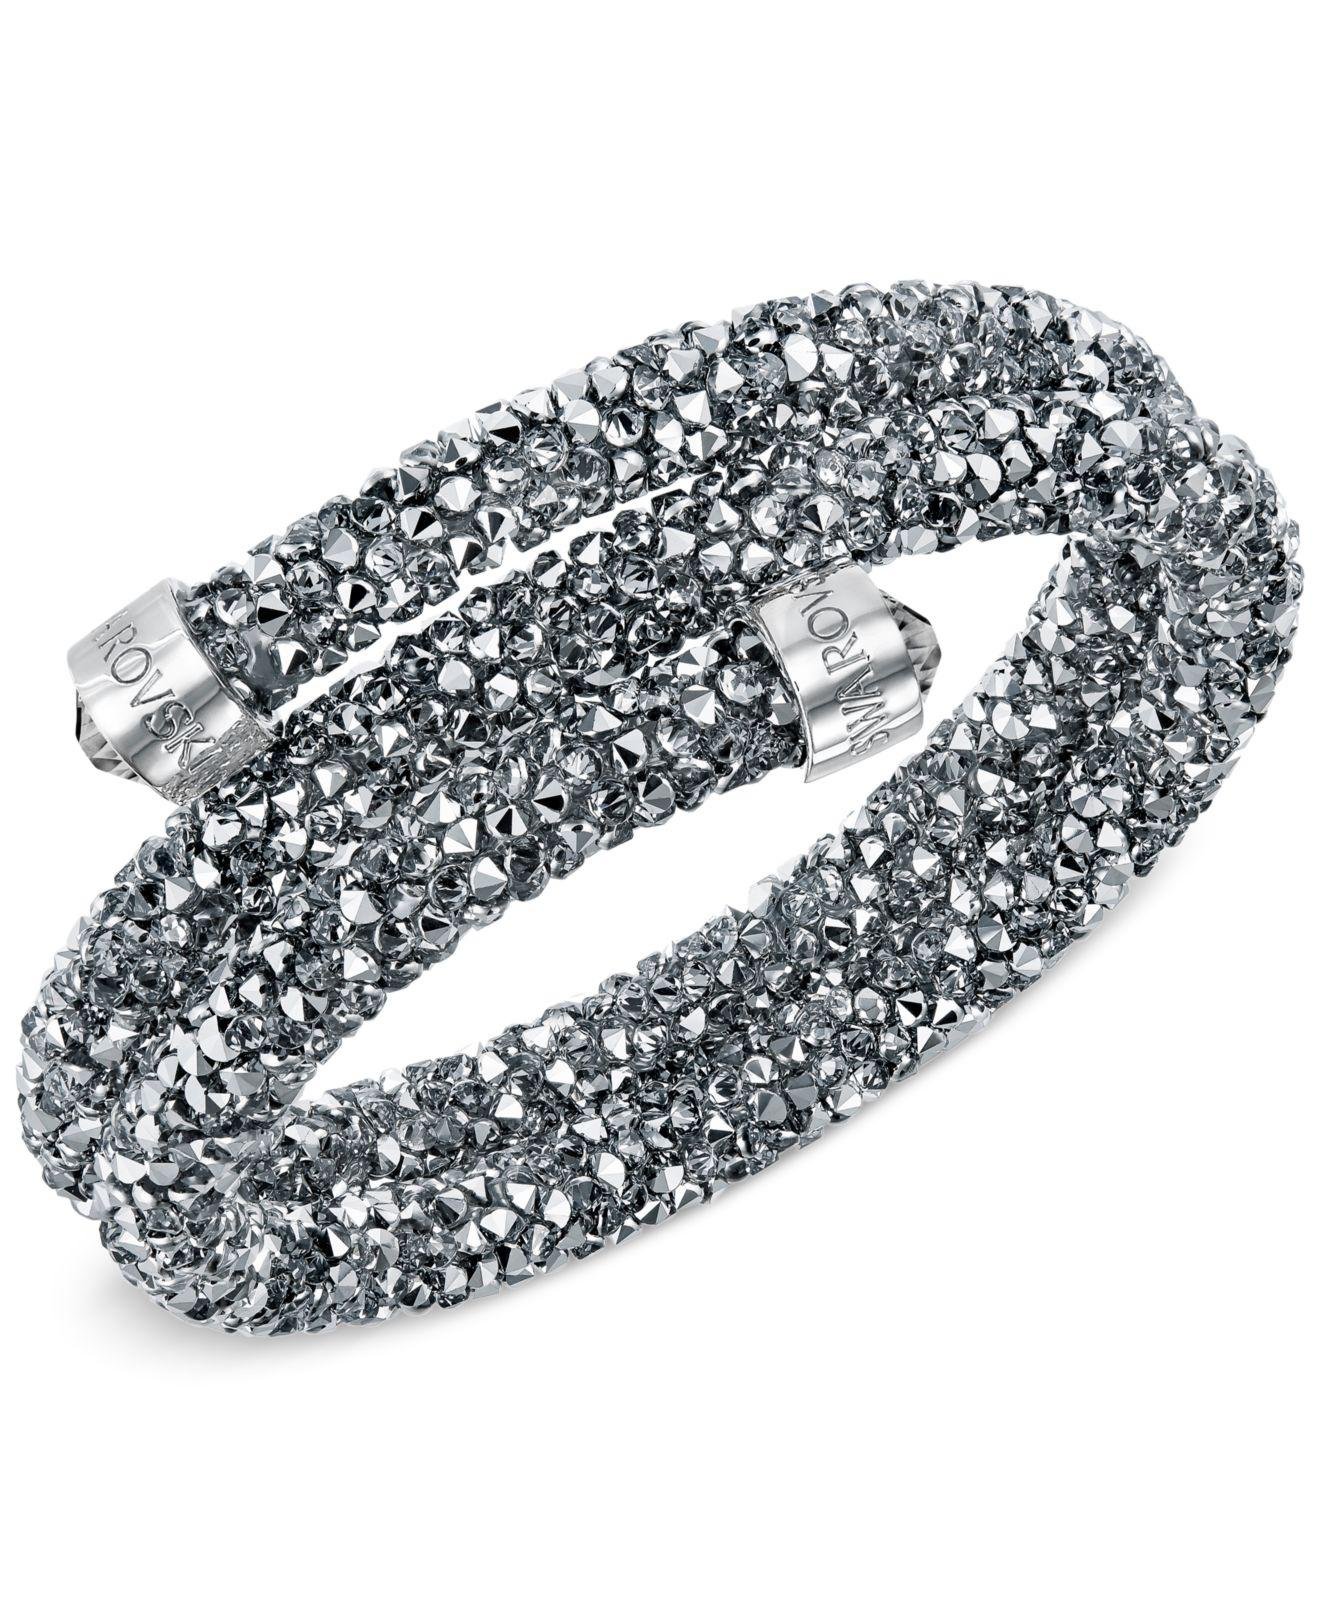 Derechos de autor Prestigio infinito Swarovski Crystaldust Bangle Bracelet in Gray | Lyst